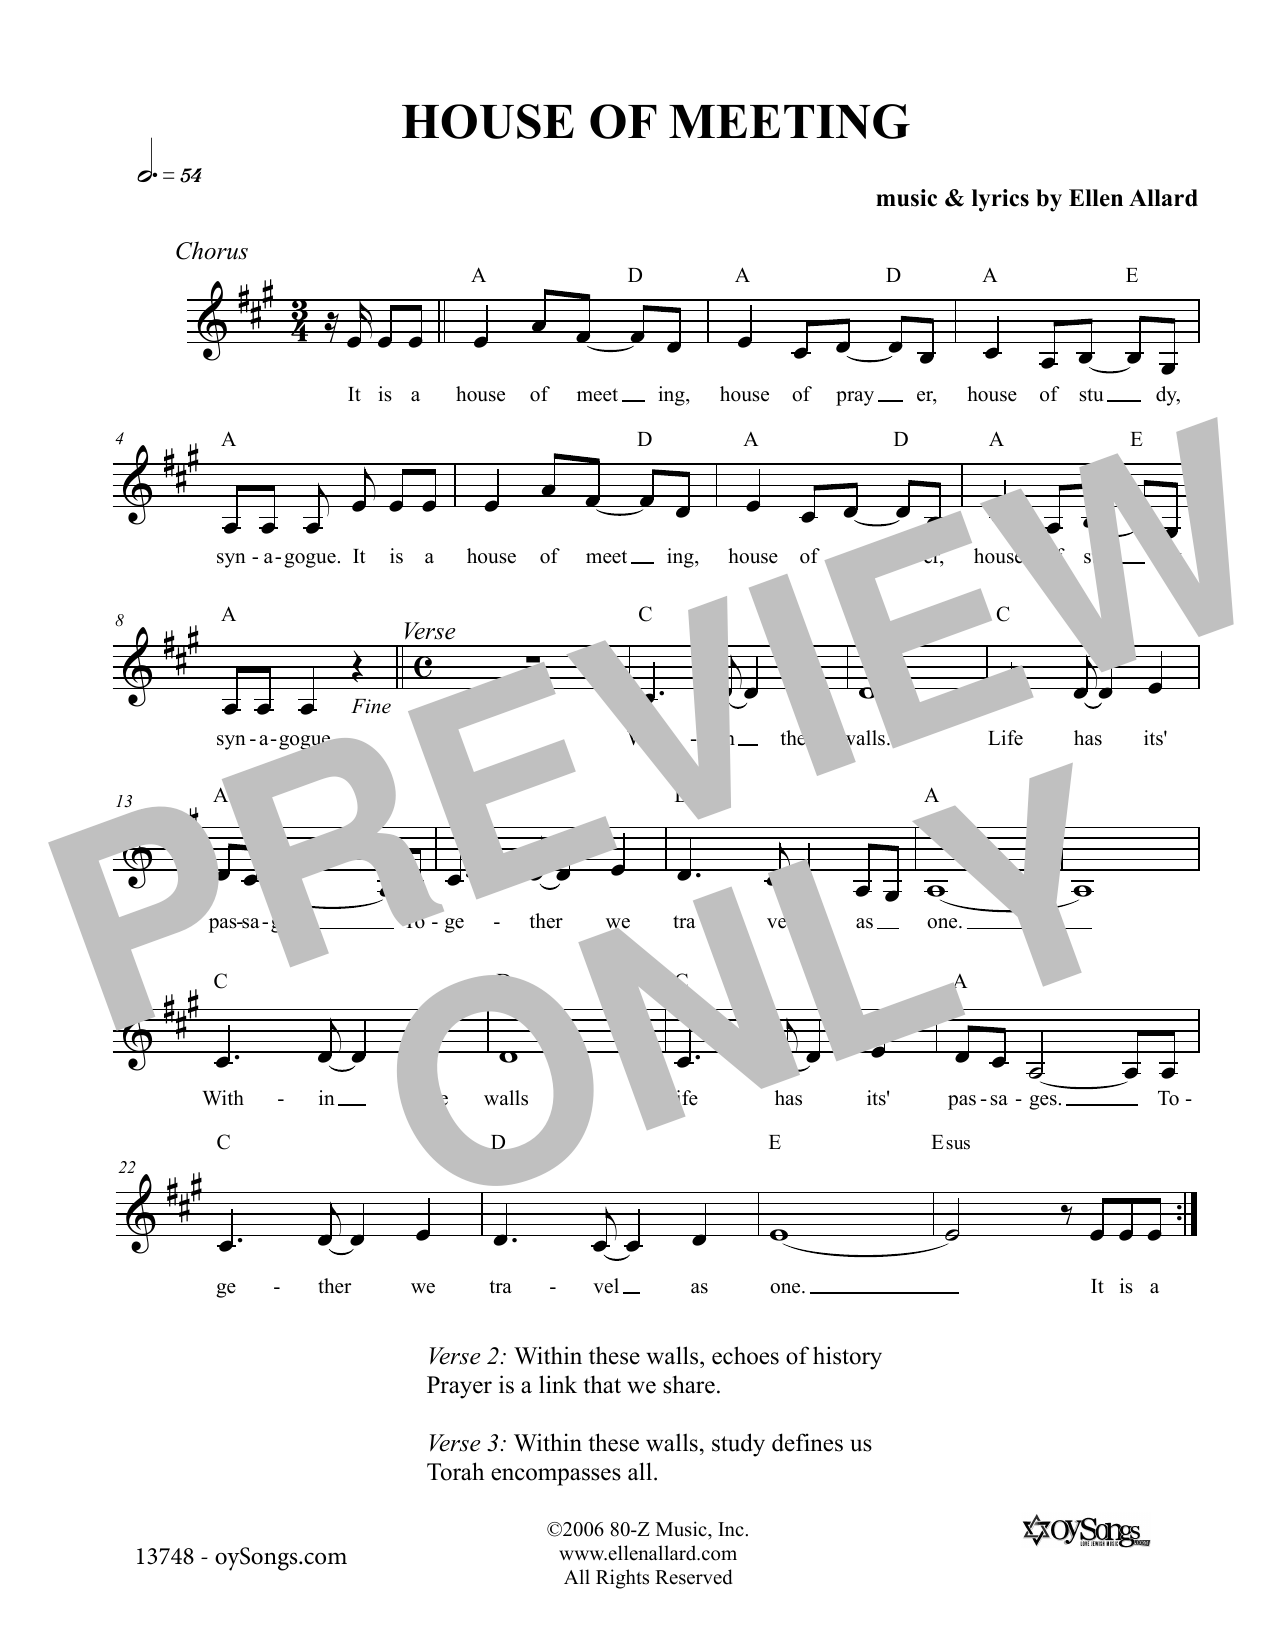 Ellen Allard House of Meeting Sheet Music Notes & Chords for Melody Line, Lyrics & Chords - Download or Print PDF